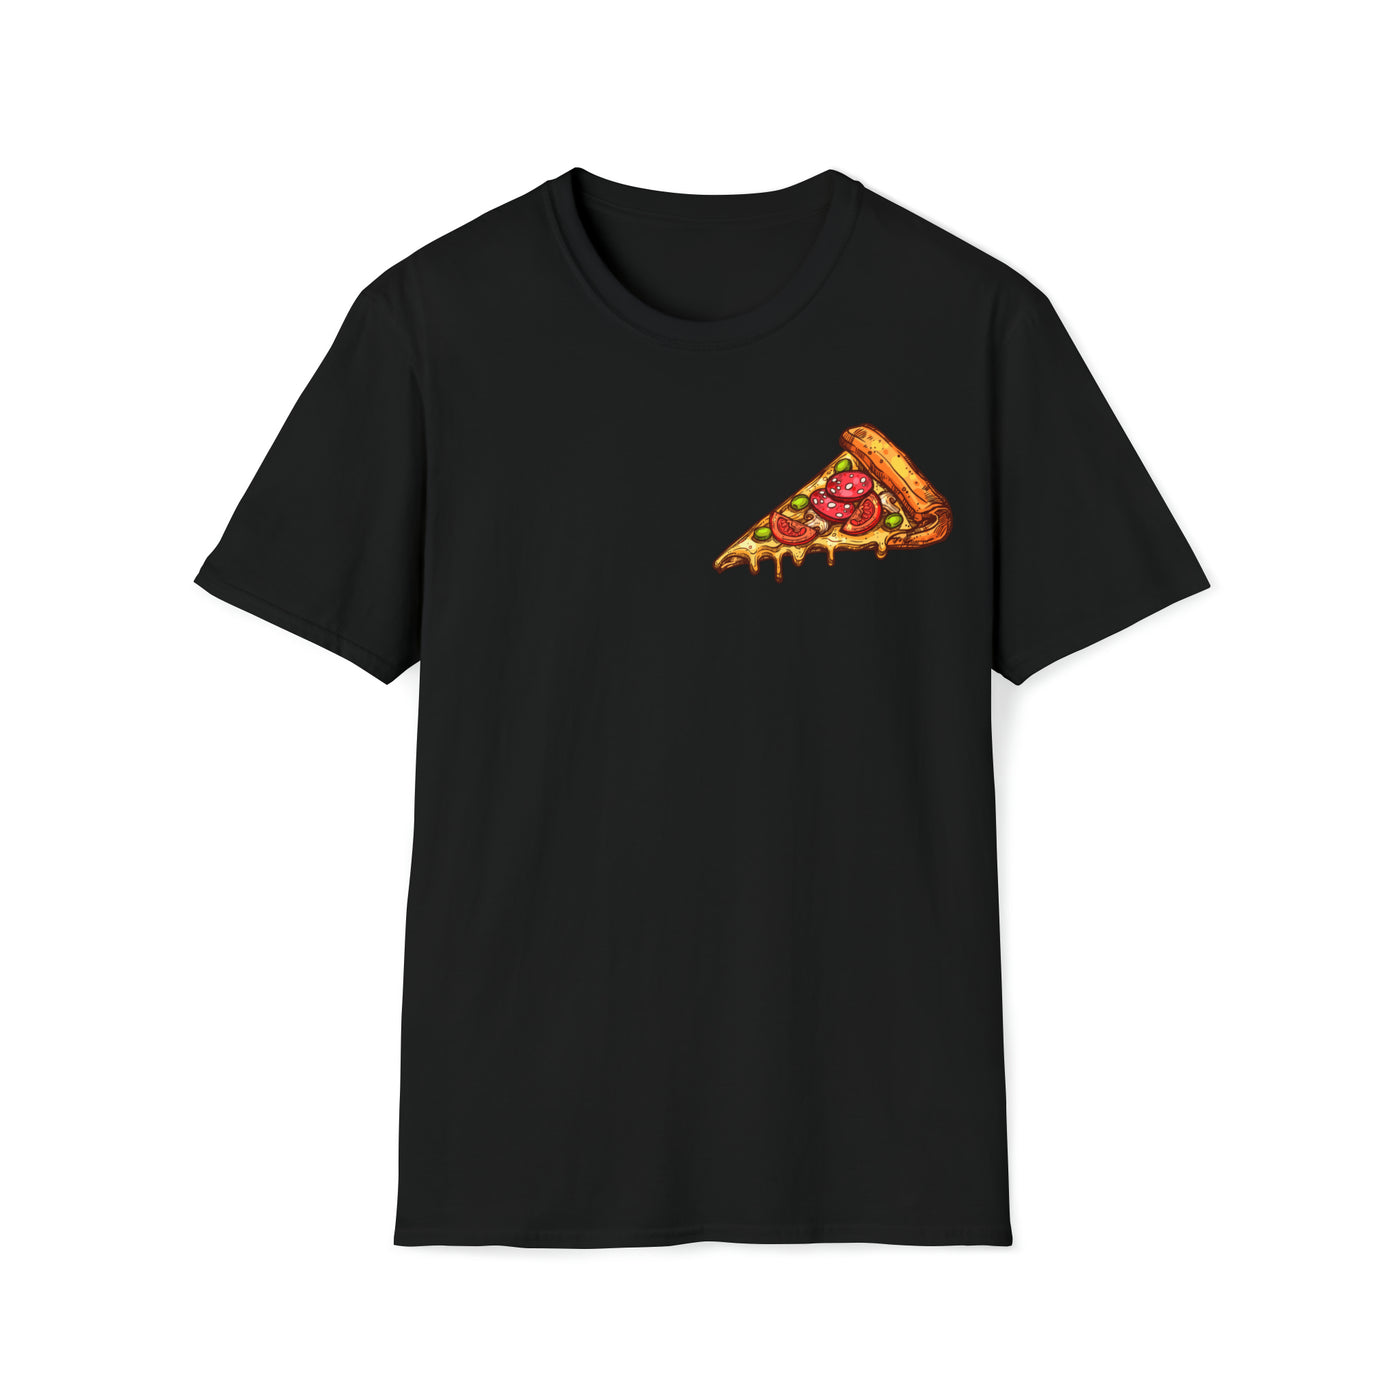 Pizza Slice Unisex T-Shirt